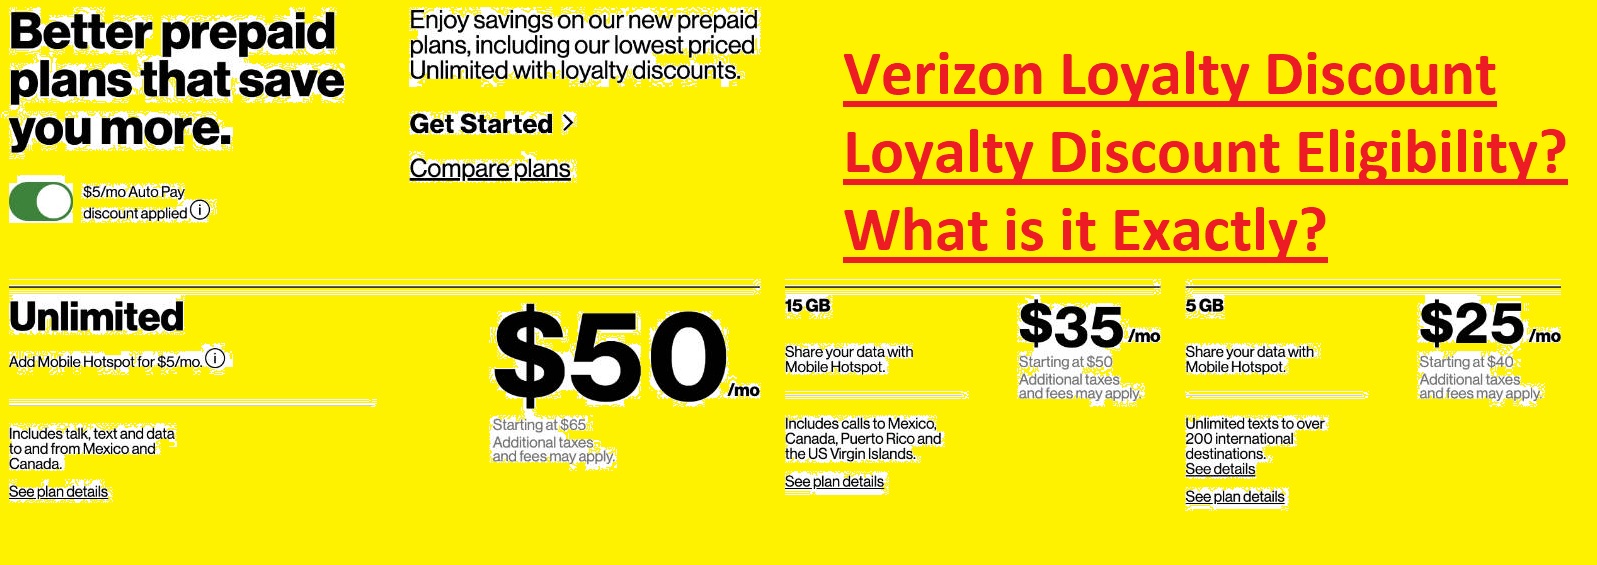 verizon wireless customer loyalty discount